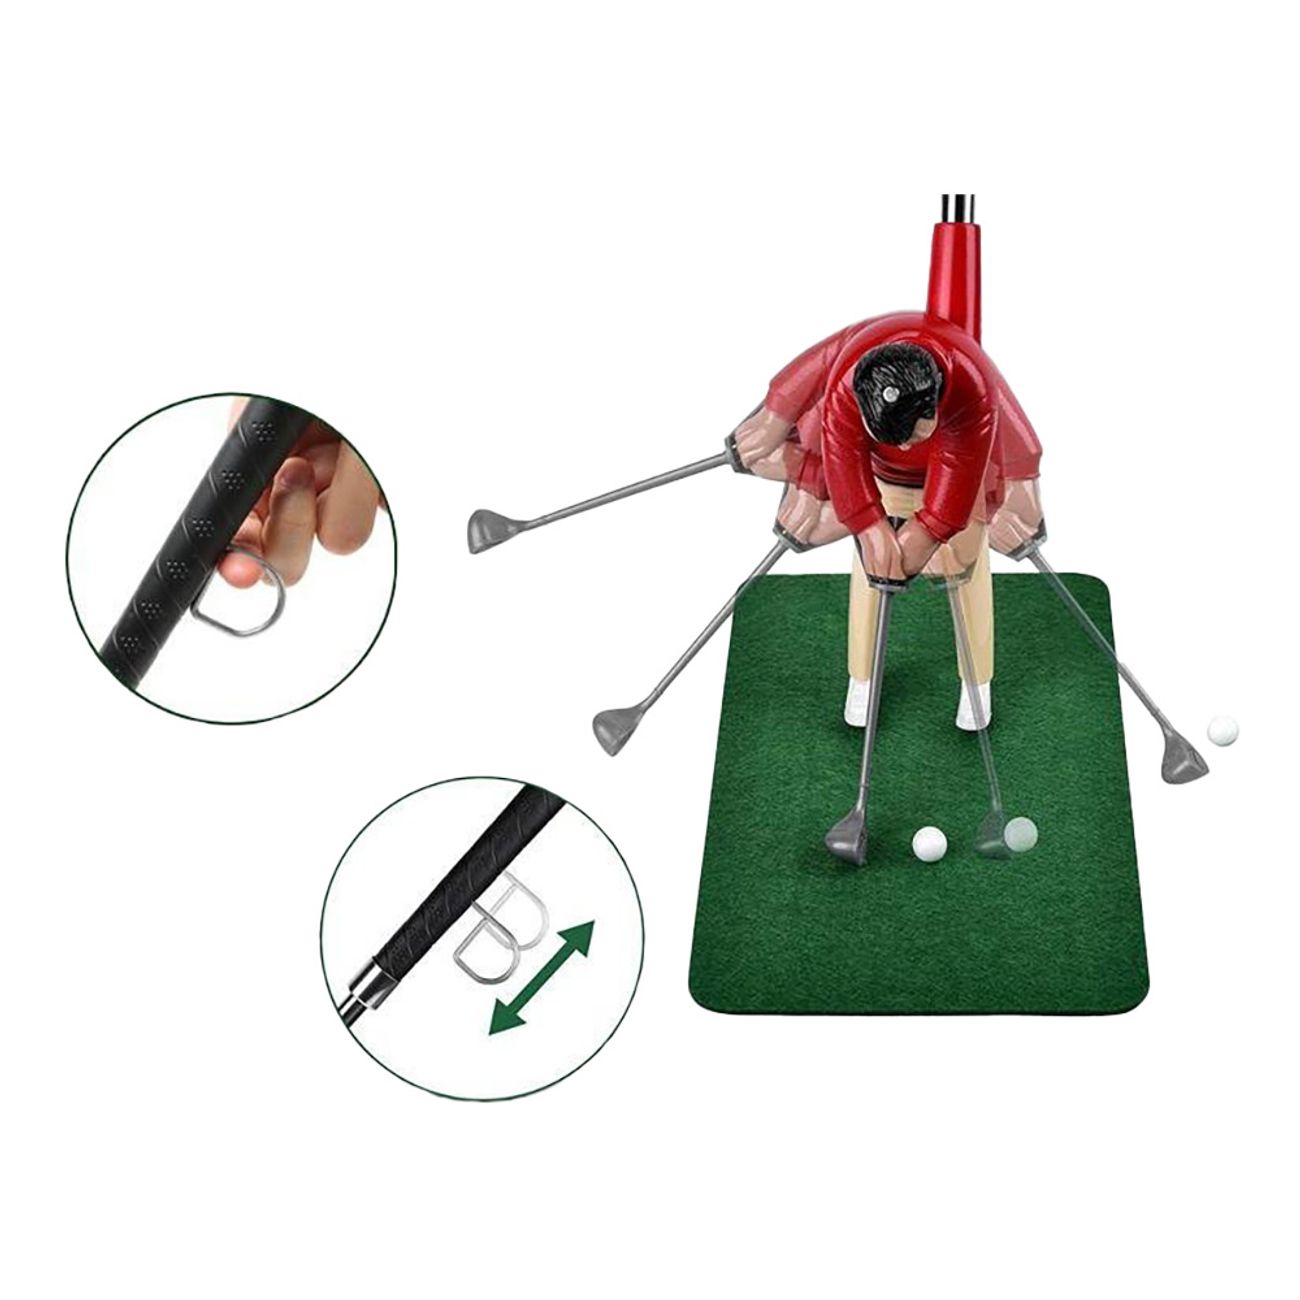 mini-golf-kit-83219-2